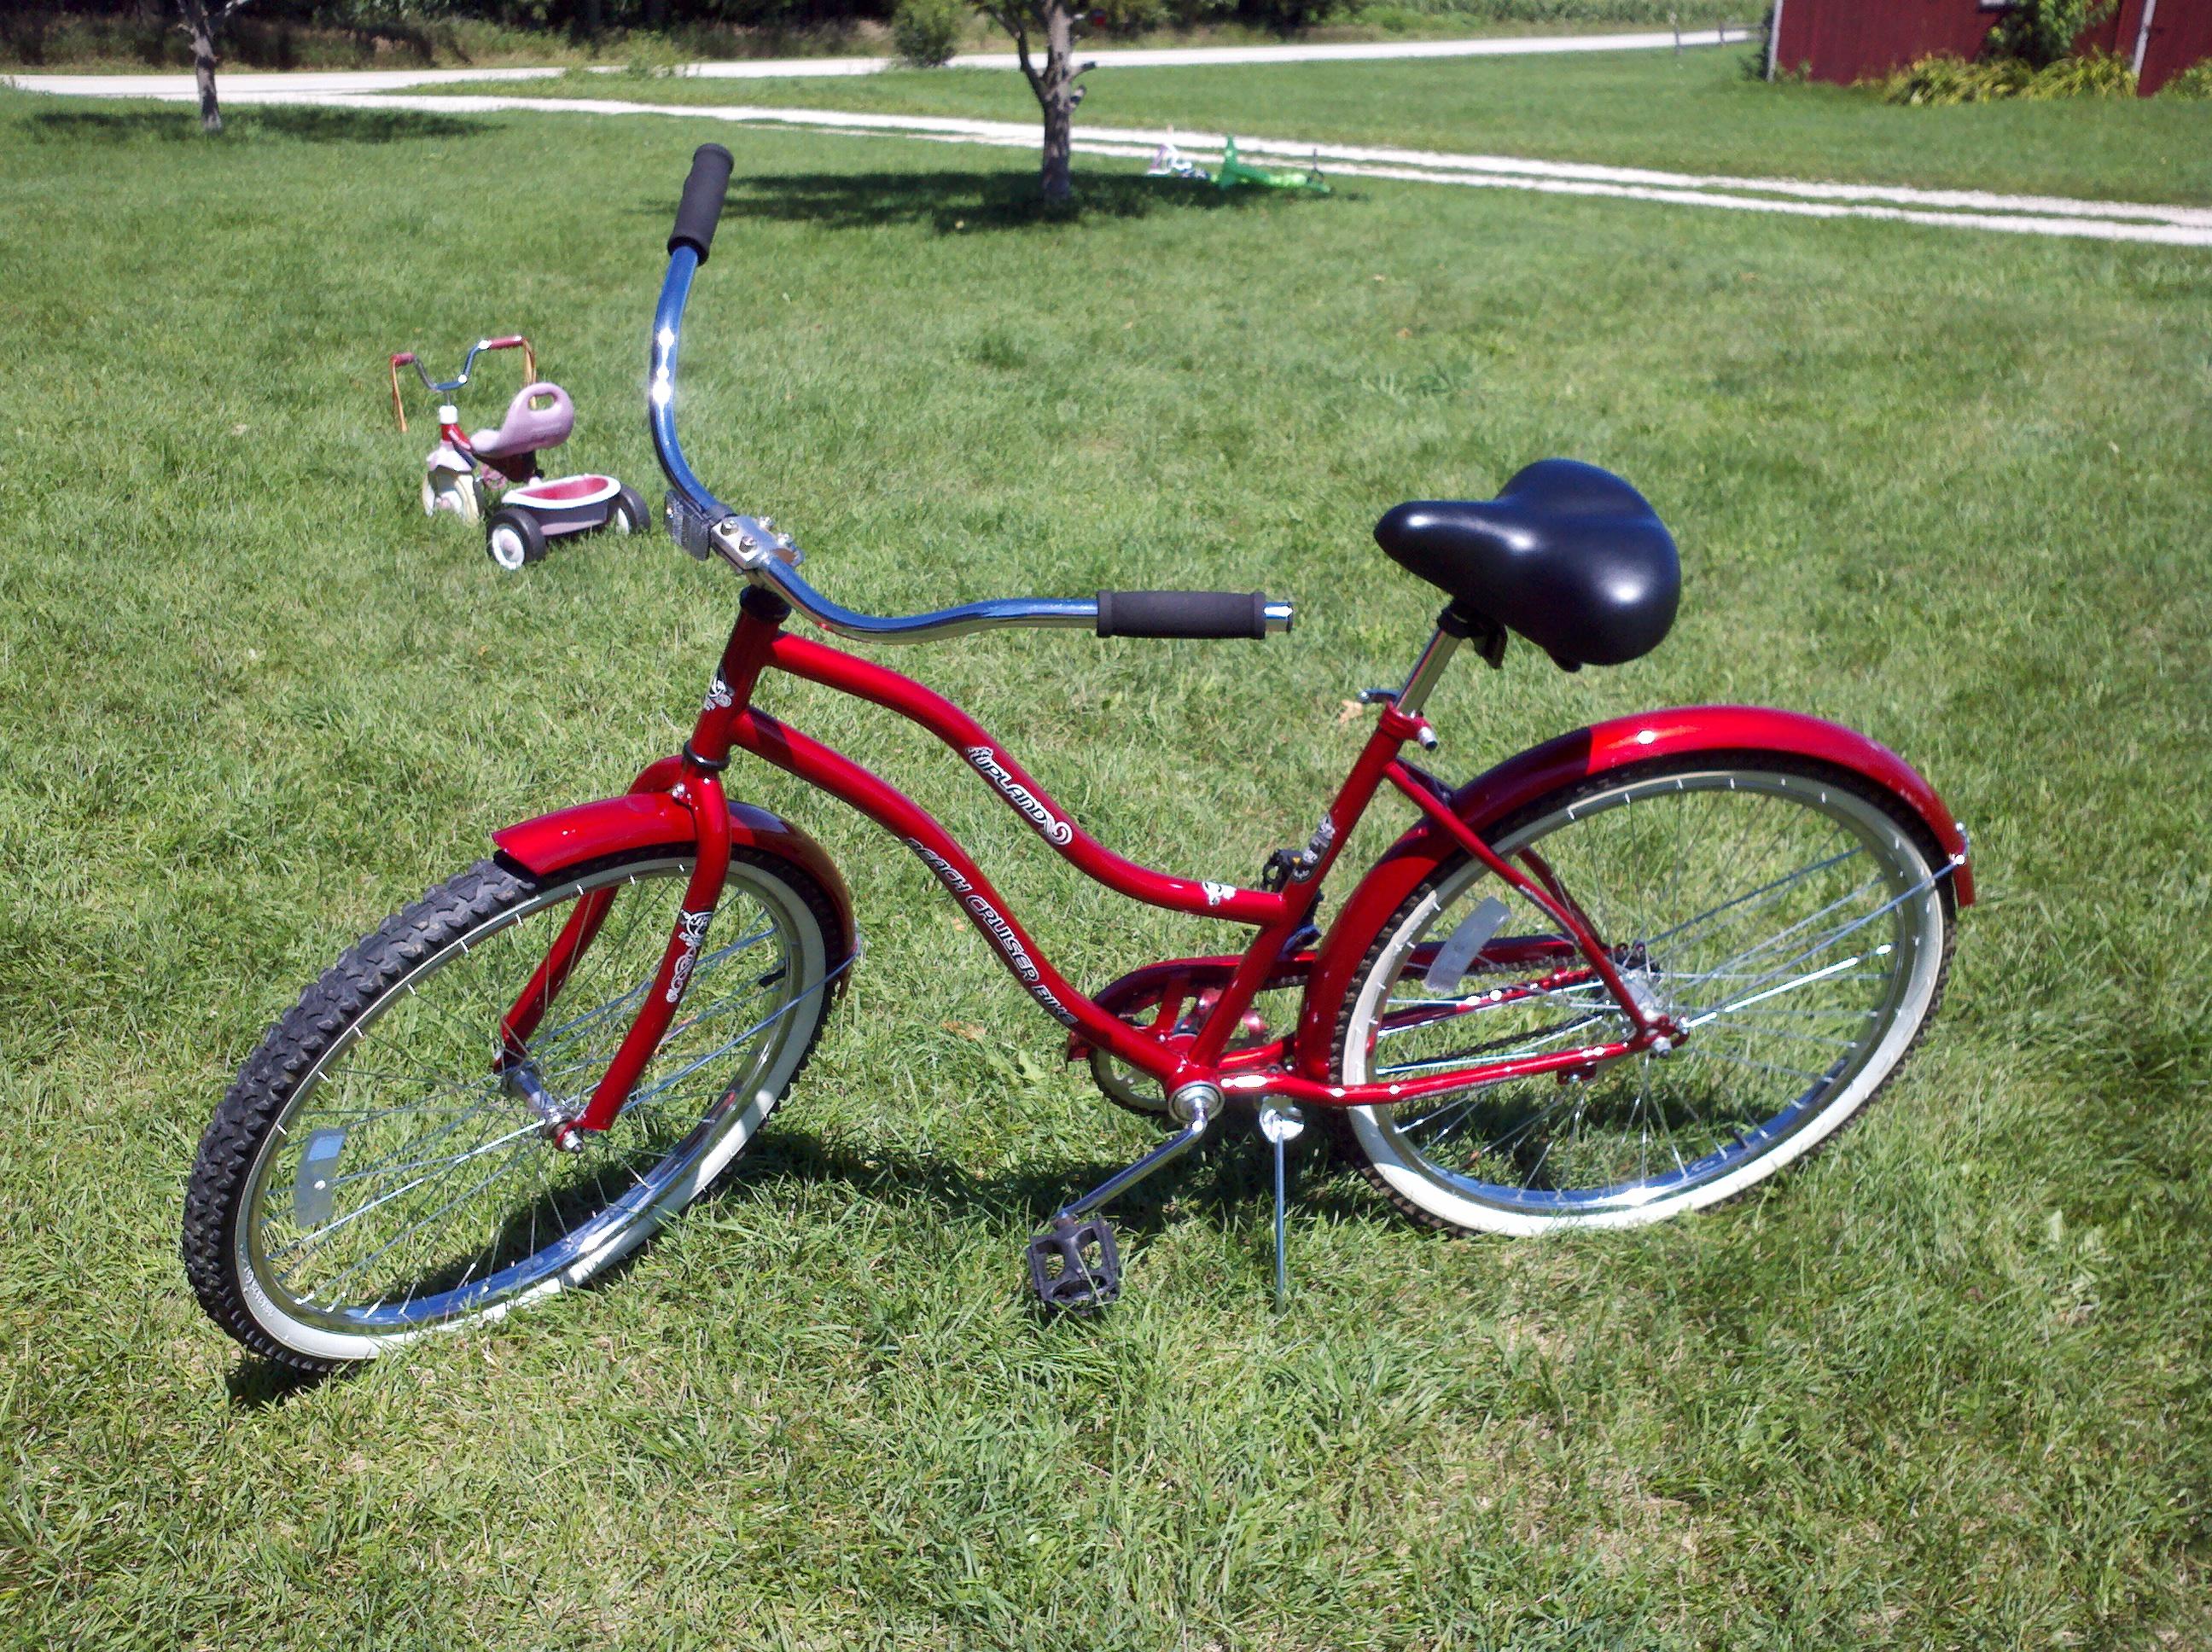 shiny red bike